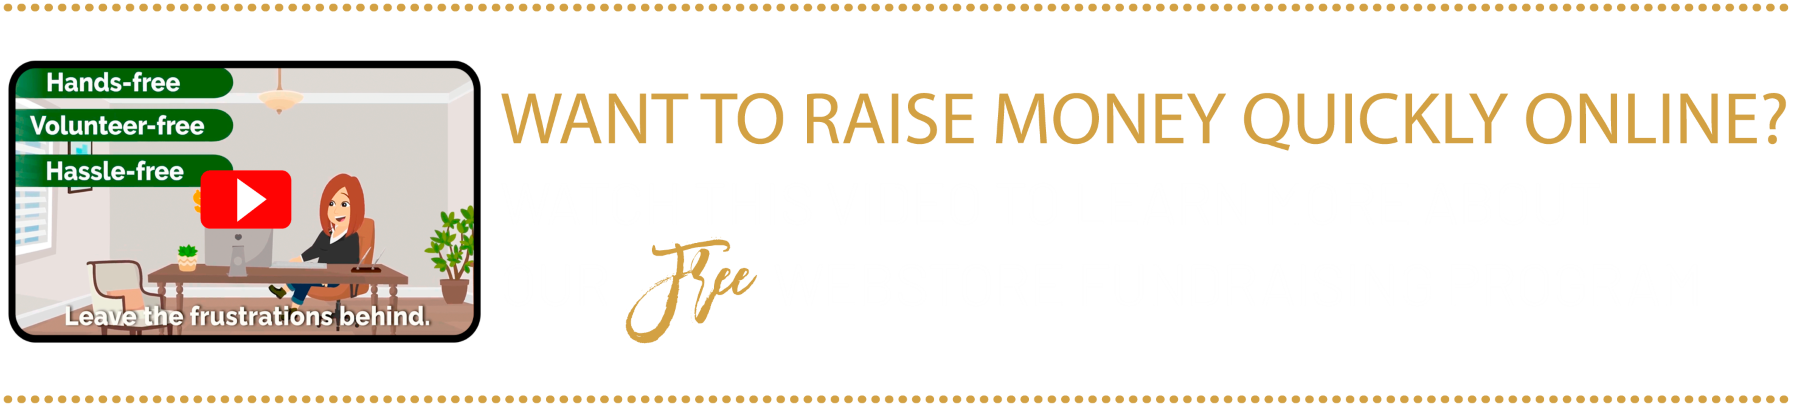 Fundraiser promo video